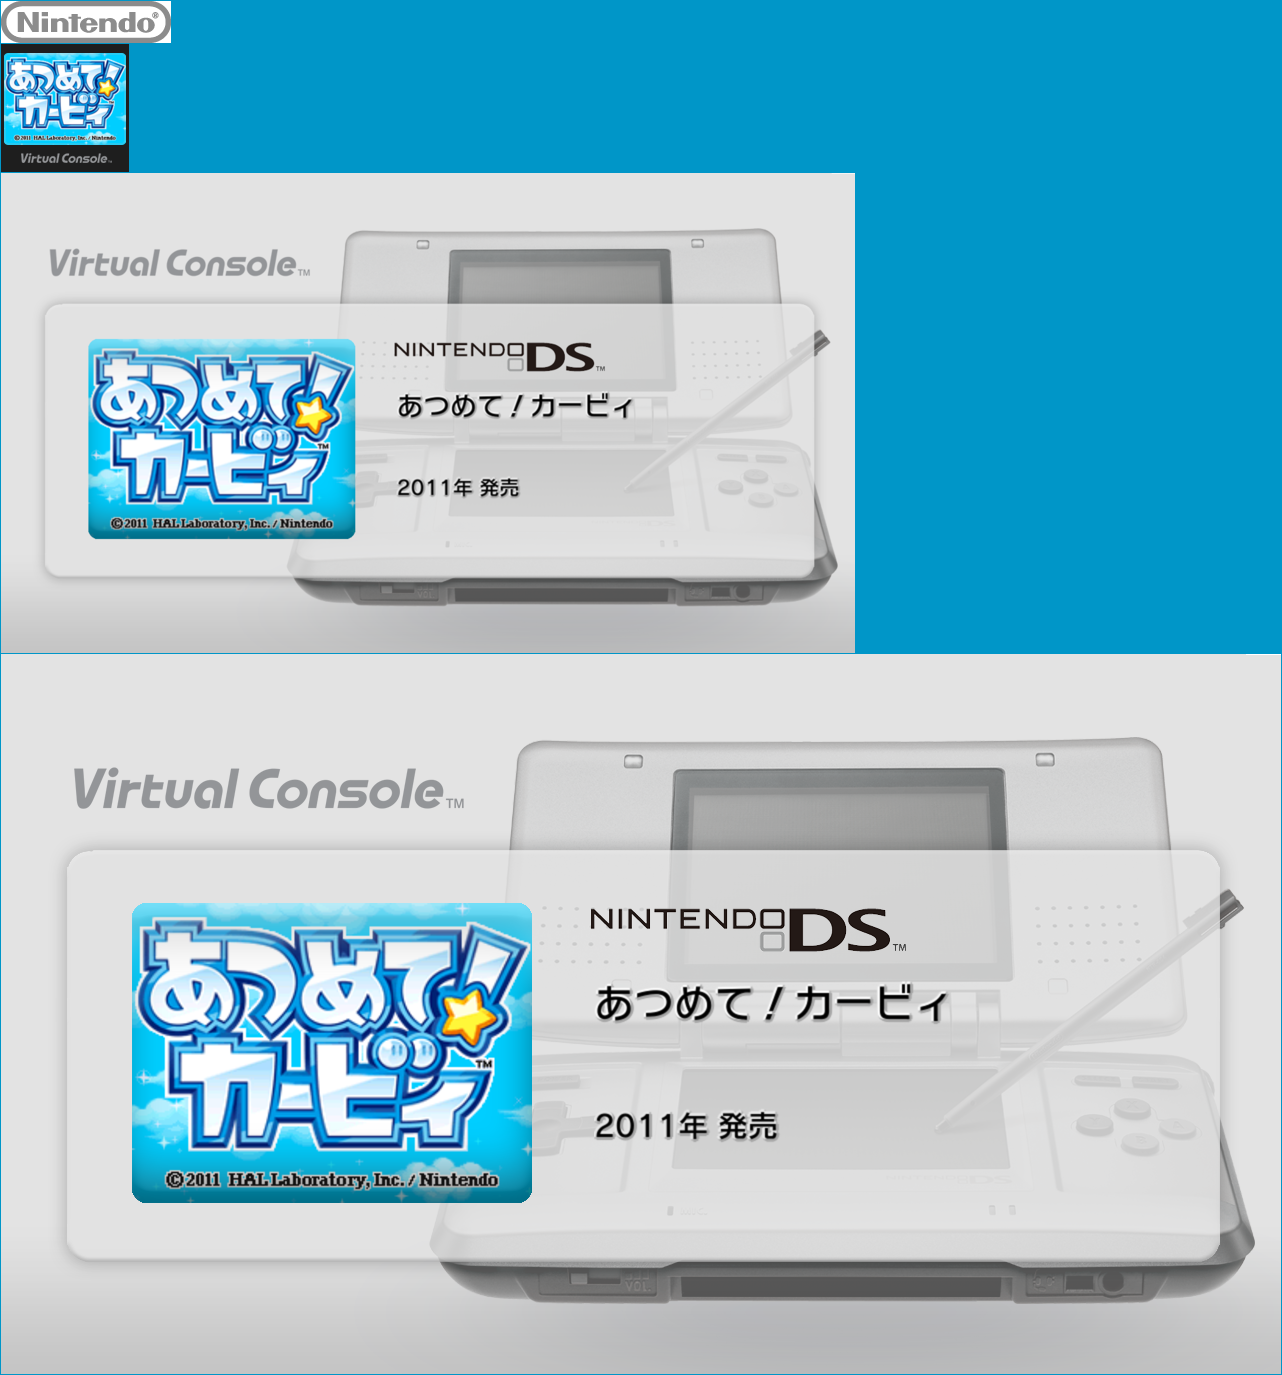 Virtual Console - Atsumete! Kirby